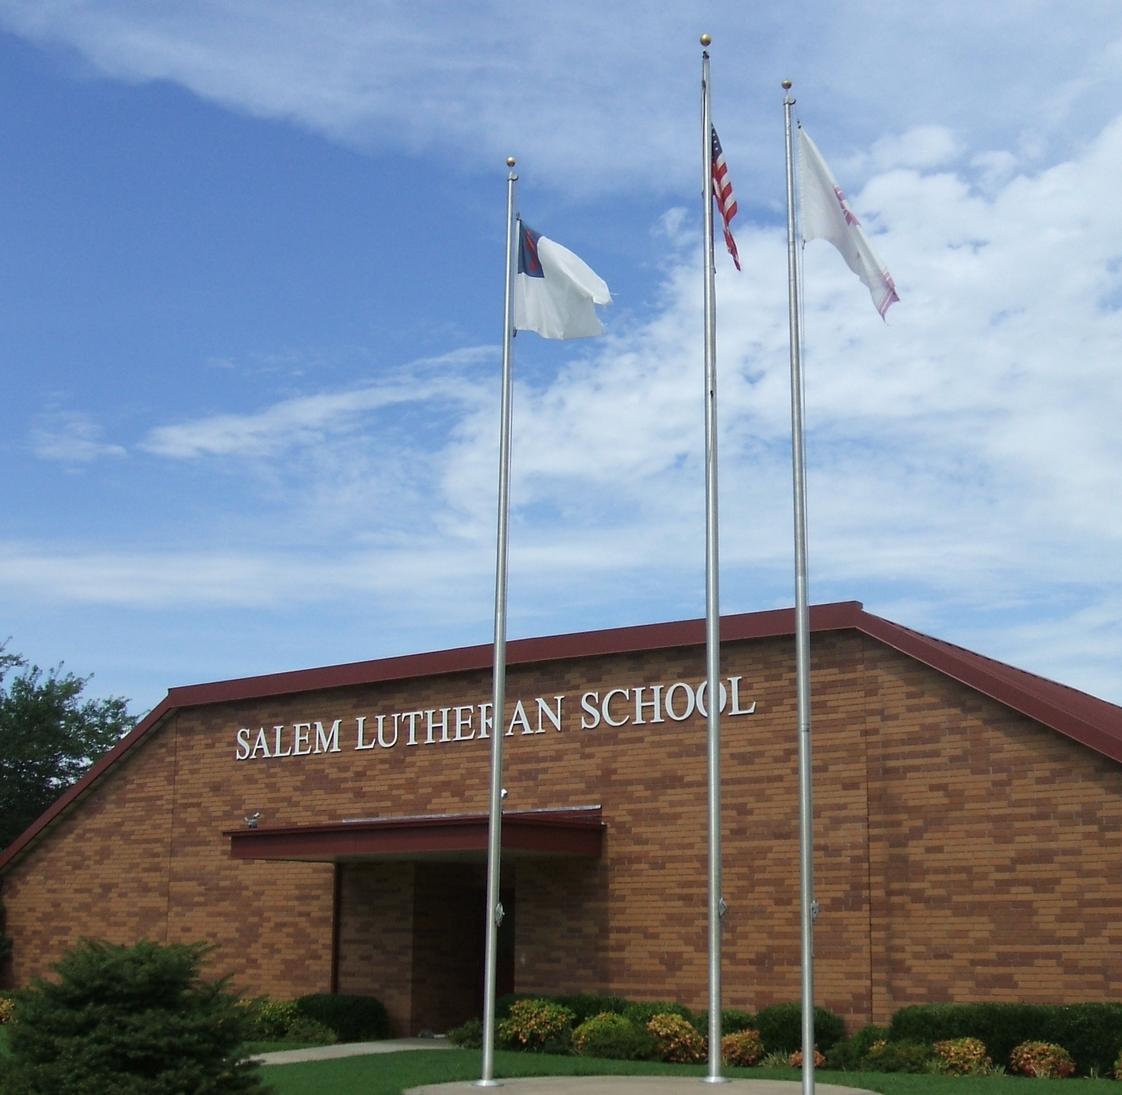 Salem Lutheran Pre-School Photo - Salem Lutheran School